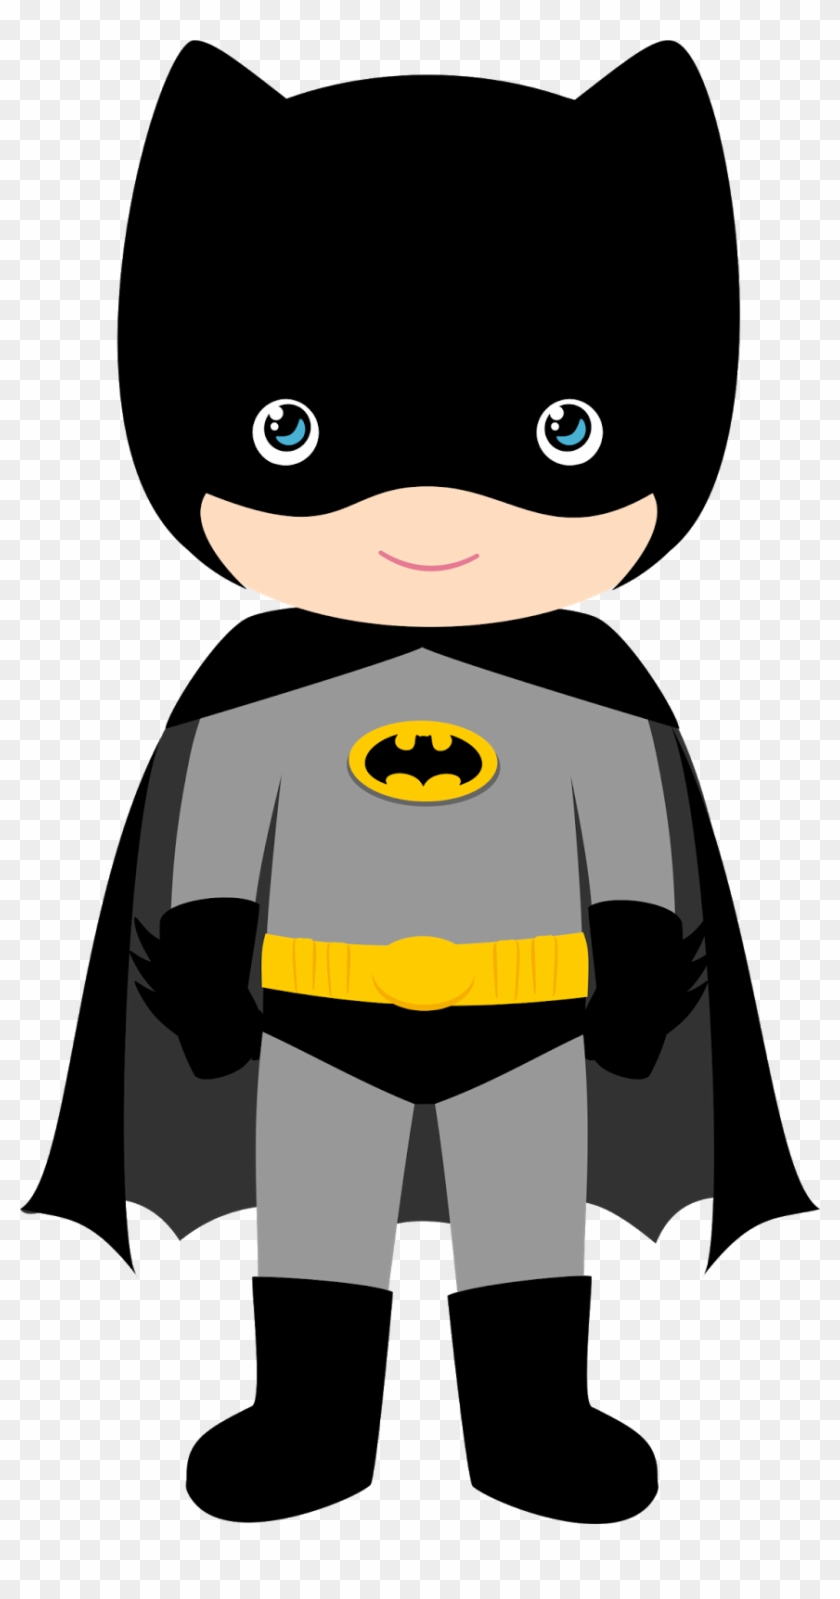 Characters Of Batman Kids Version Clip Art - Batman Baby - Free Transparent  PNG Clipart Images Download